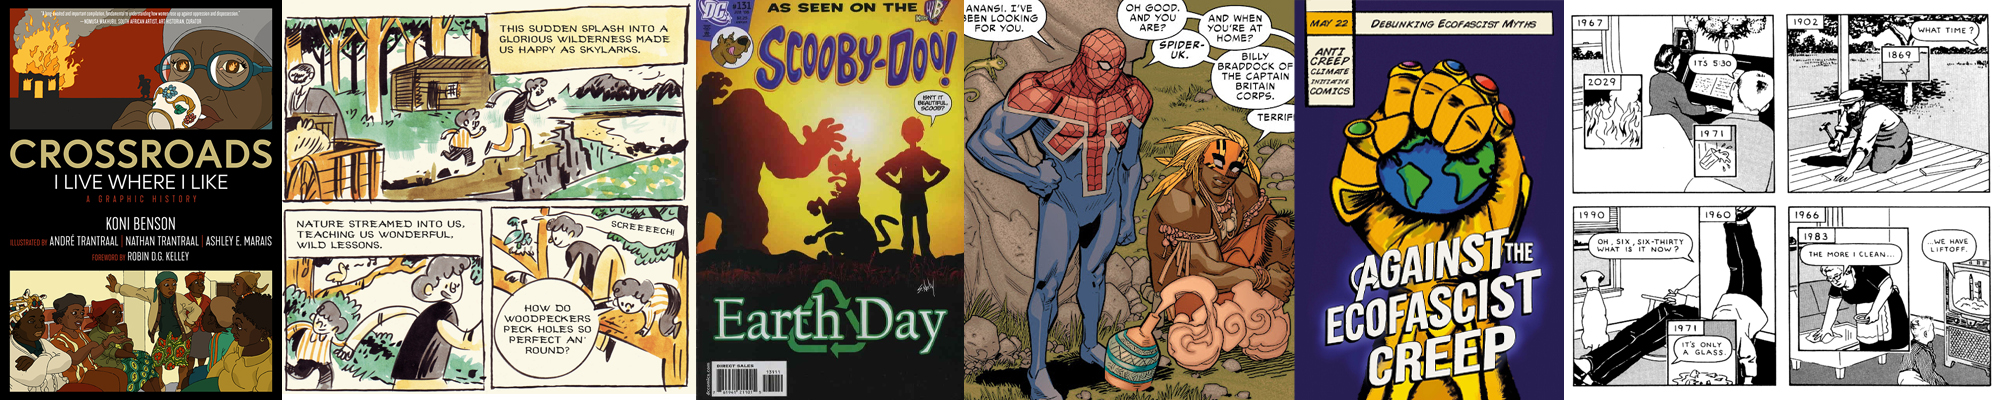 Various Comics: John Muir, Against the Ecofascist Creep, Crossroads, Scooby Doo, and Spiderman